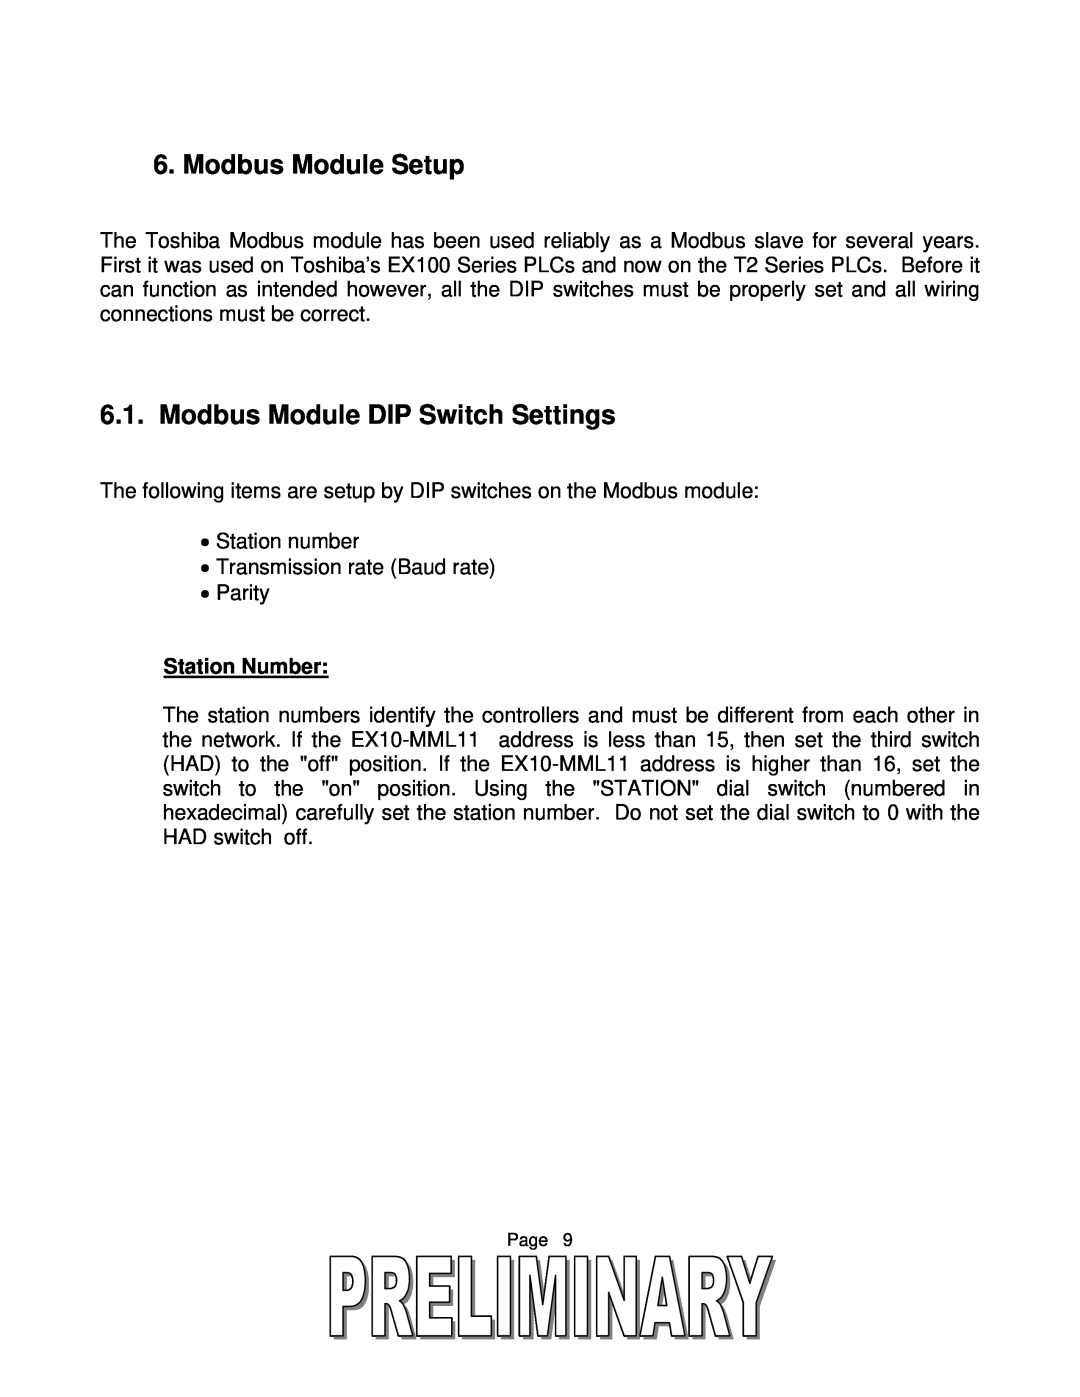 Toshiba T2 Series user manual Modbus Module Setup, Modbus Module DIP Switch Settings, Station Number 